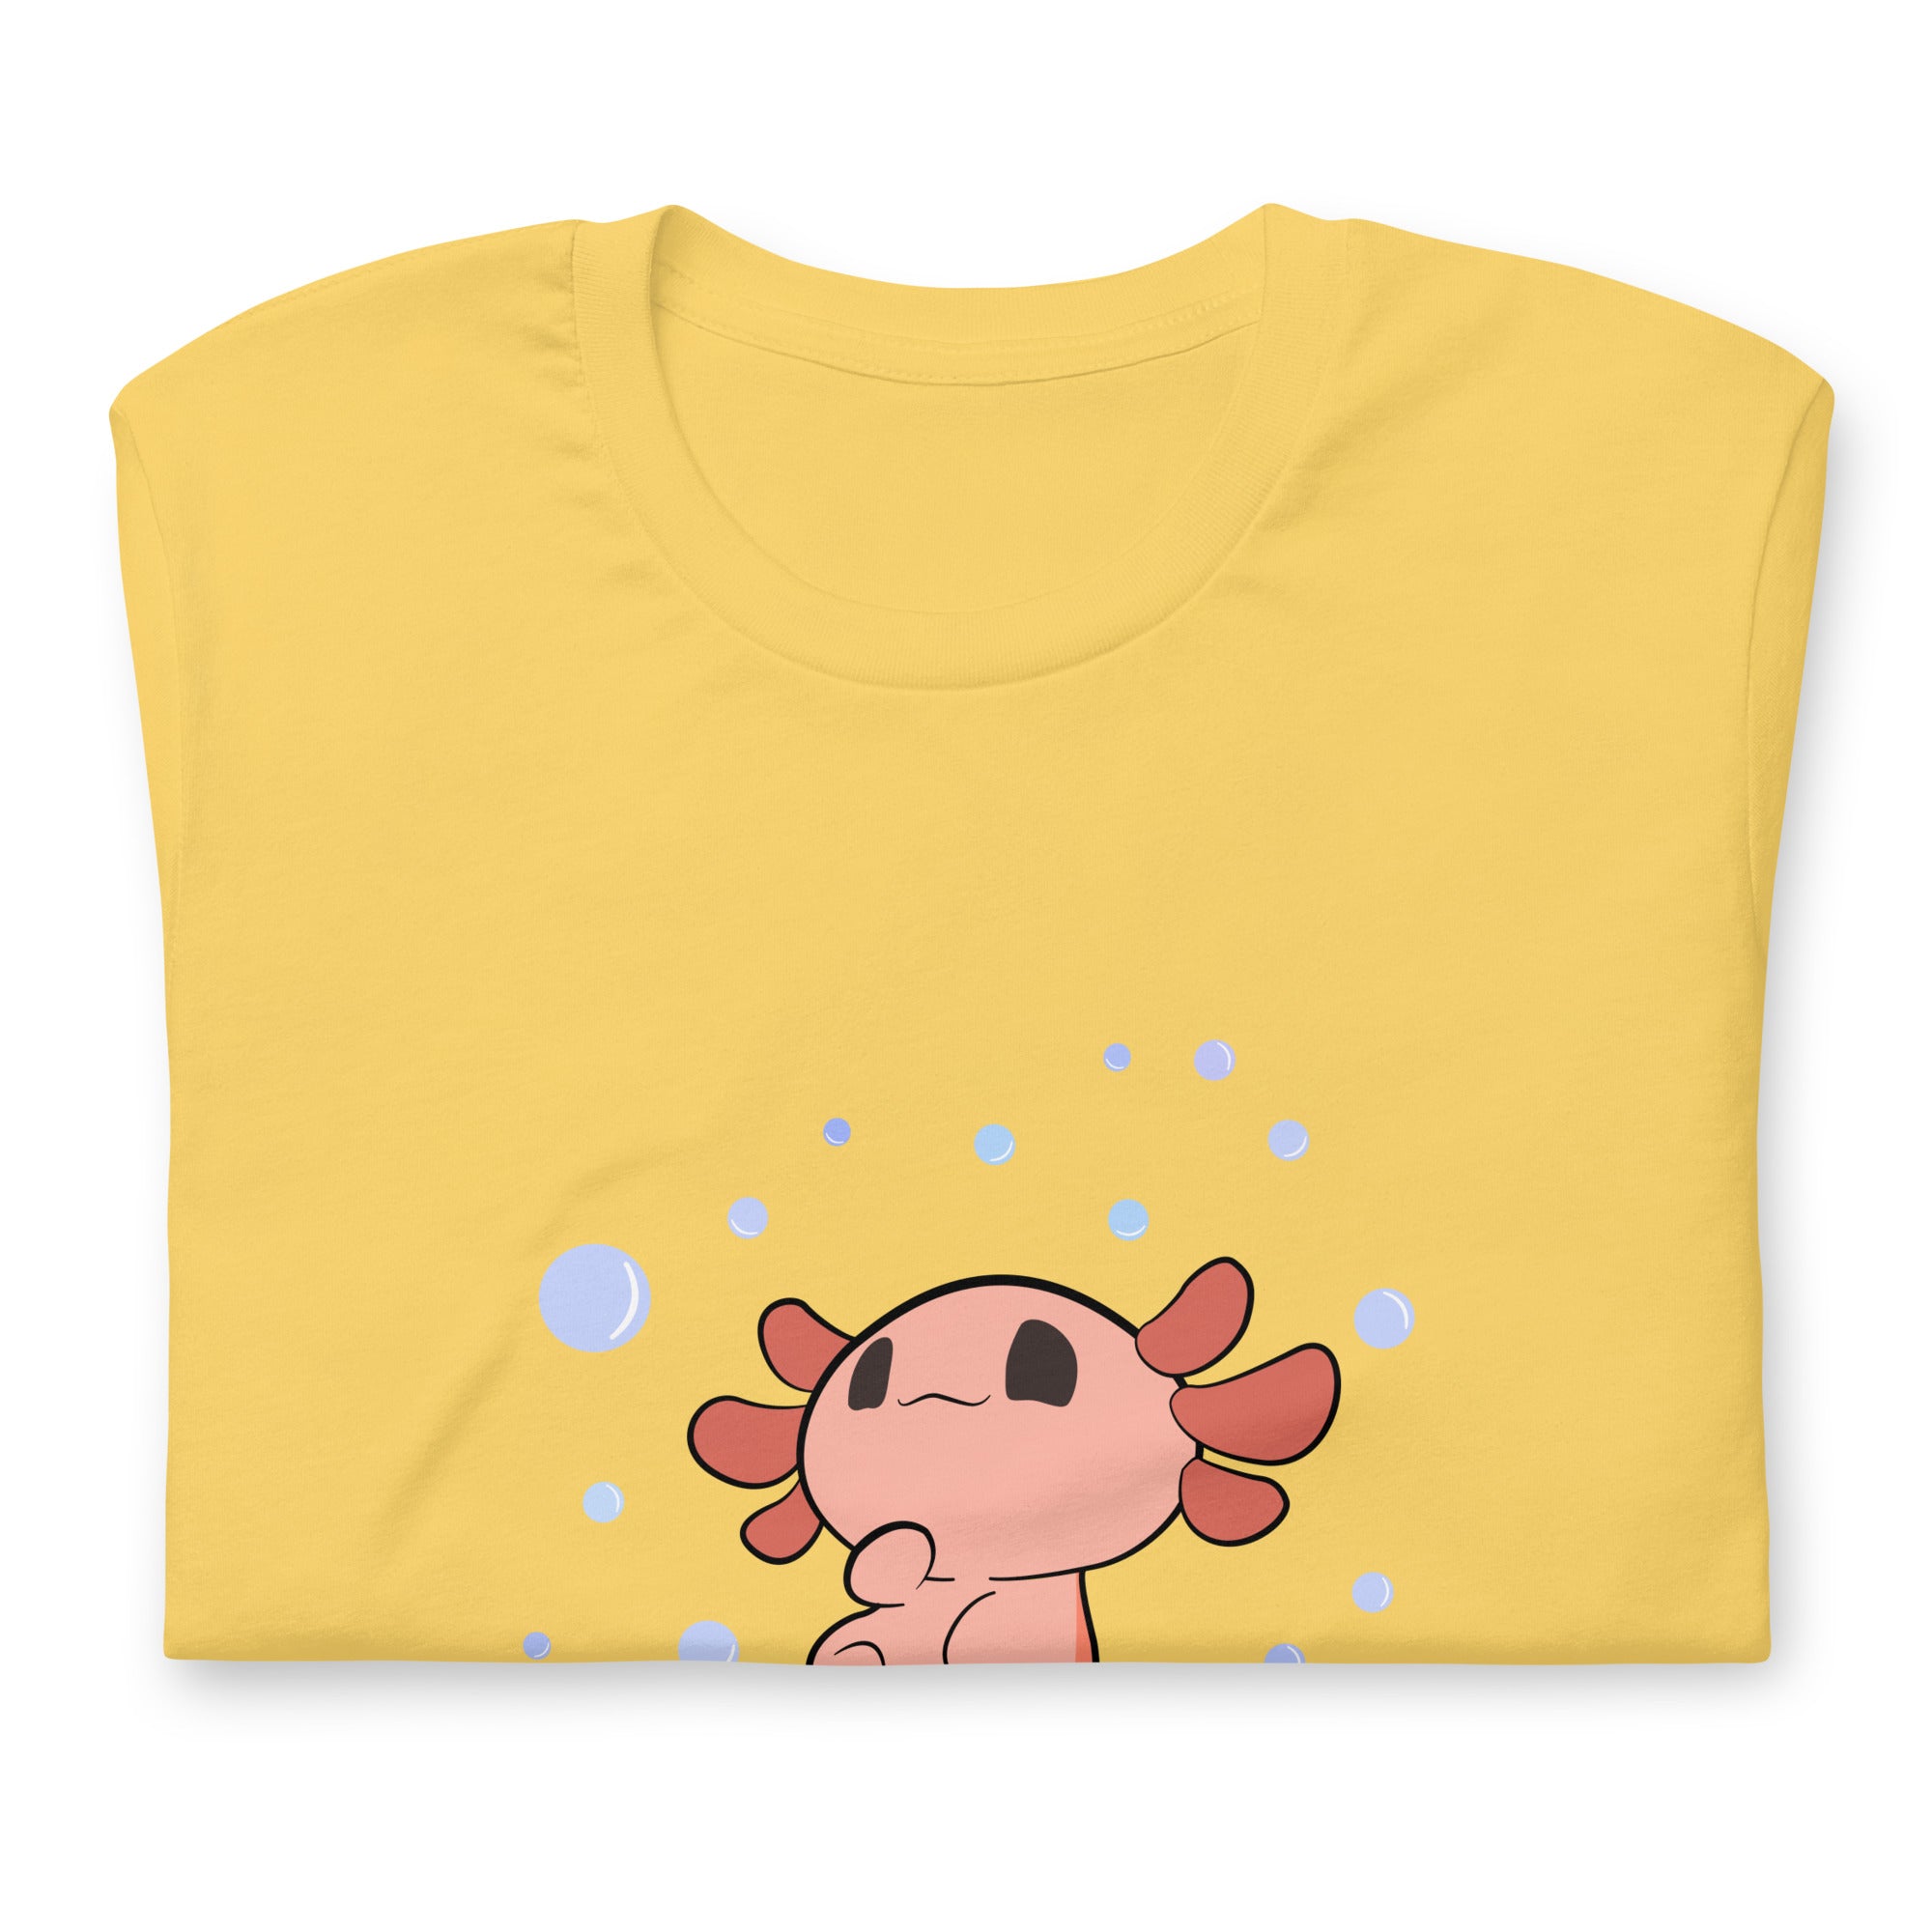 Axel the Axolotl / T-Shirt